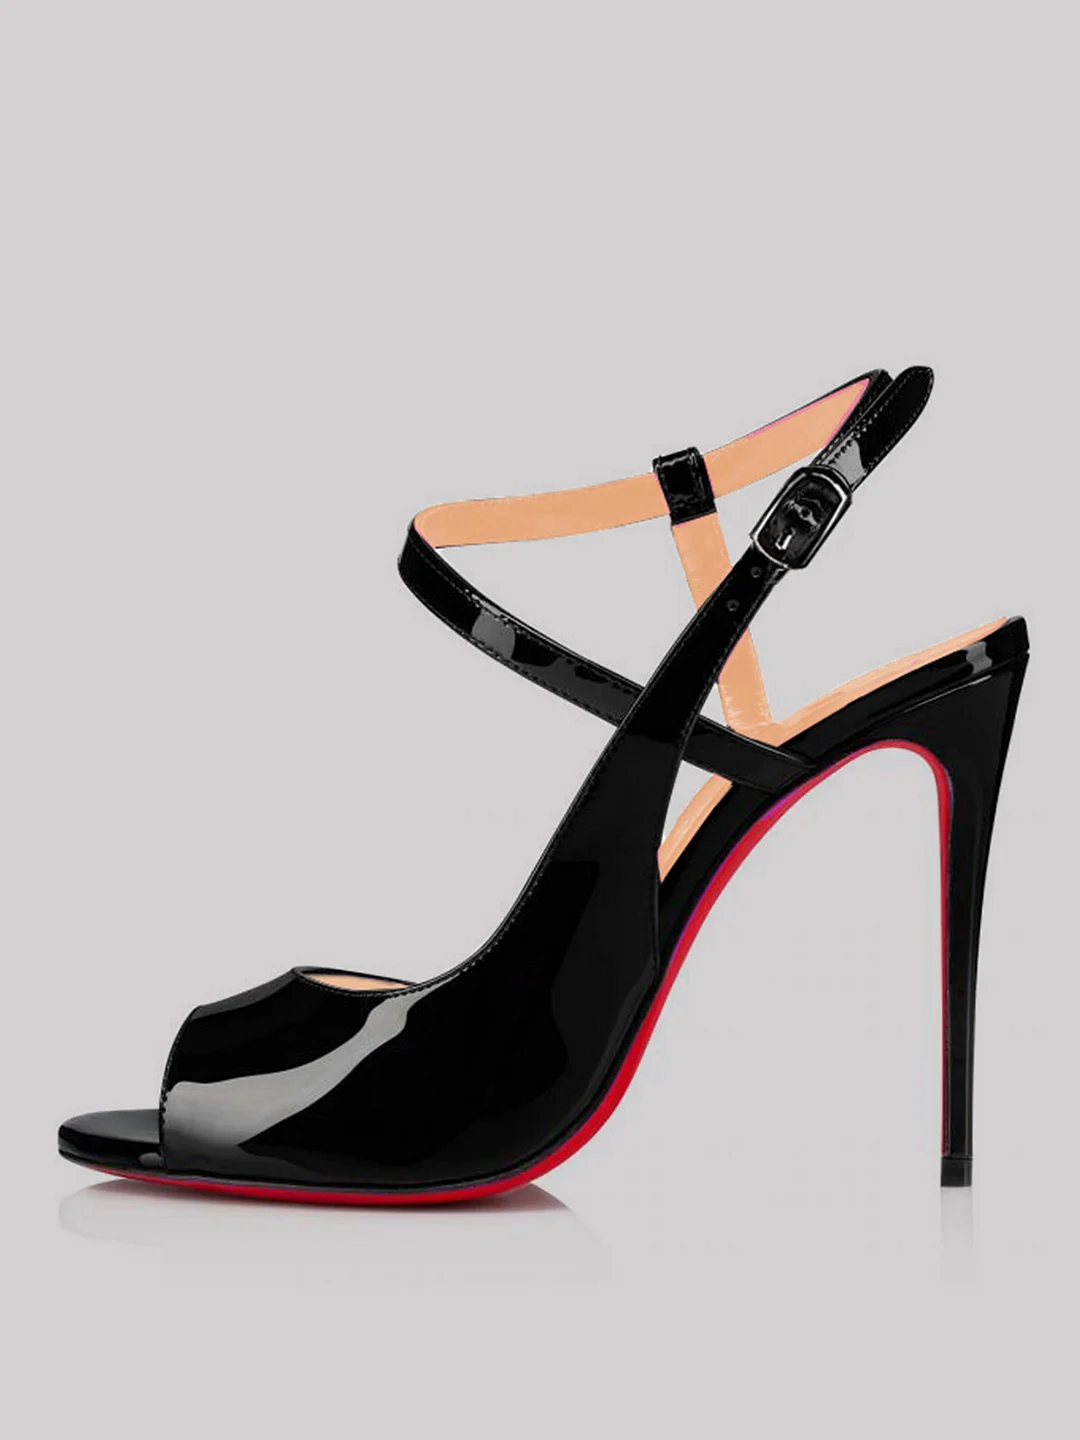 120mm Women's Stiletto High Heels Open Toe Sandals Red Bottom So Jenlove Shoes